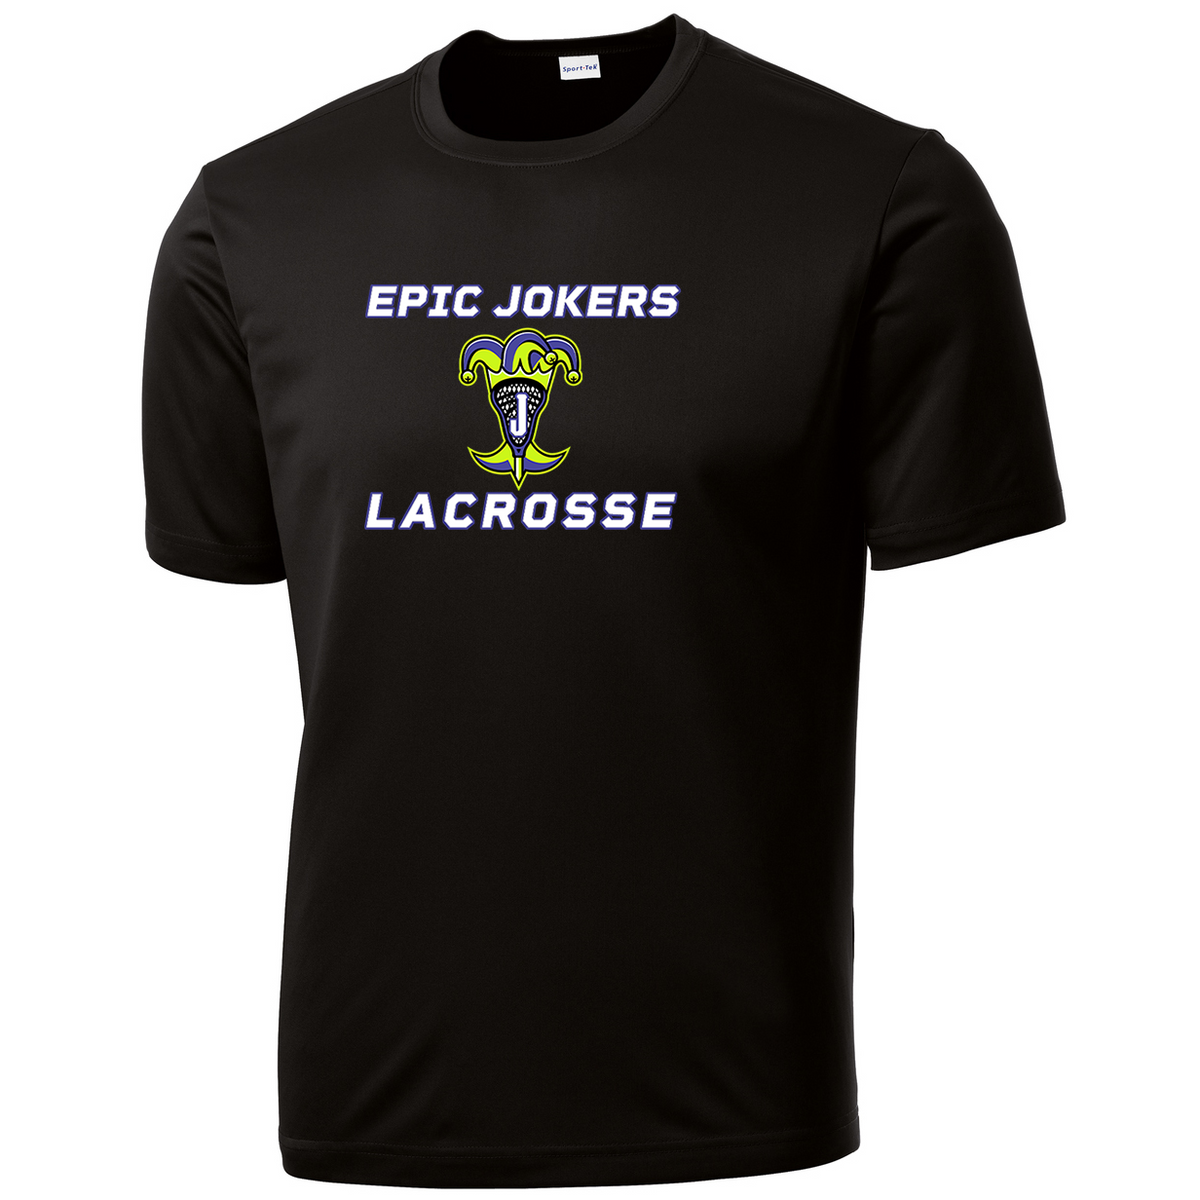 Epic Jokers Performance T-Shirt